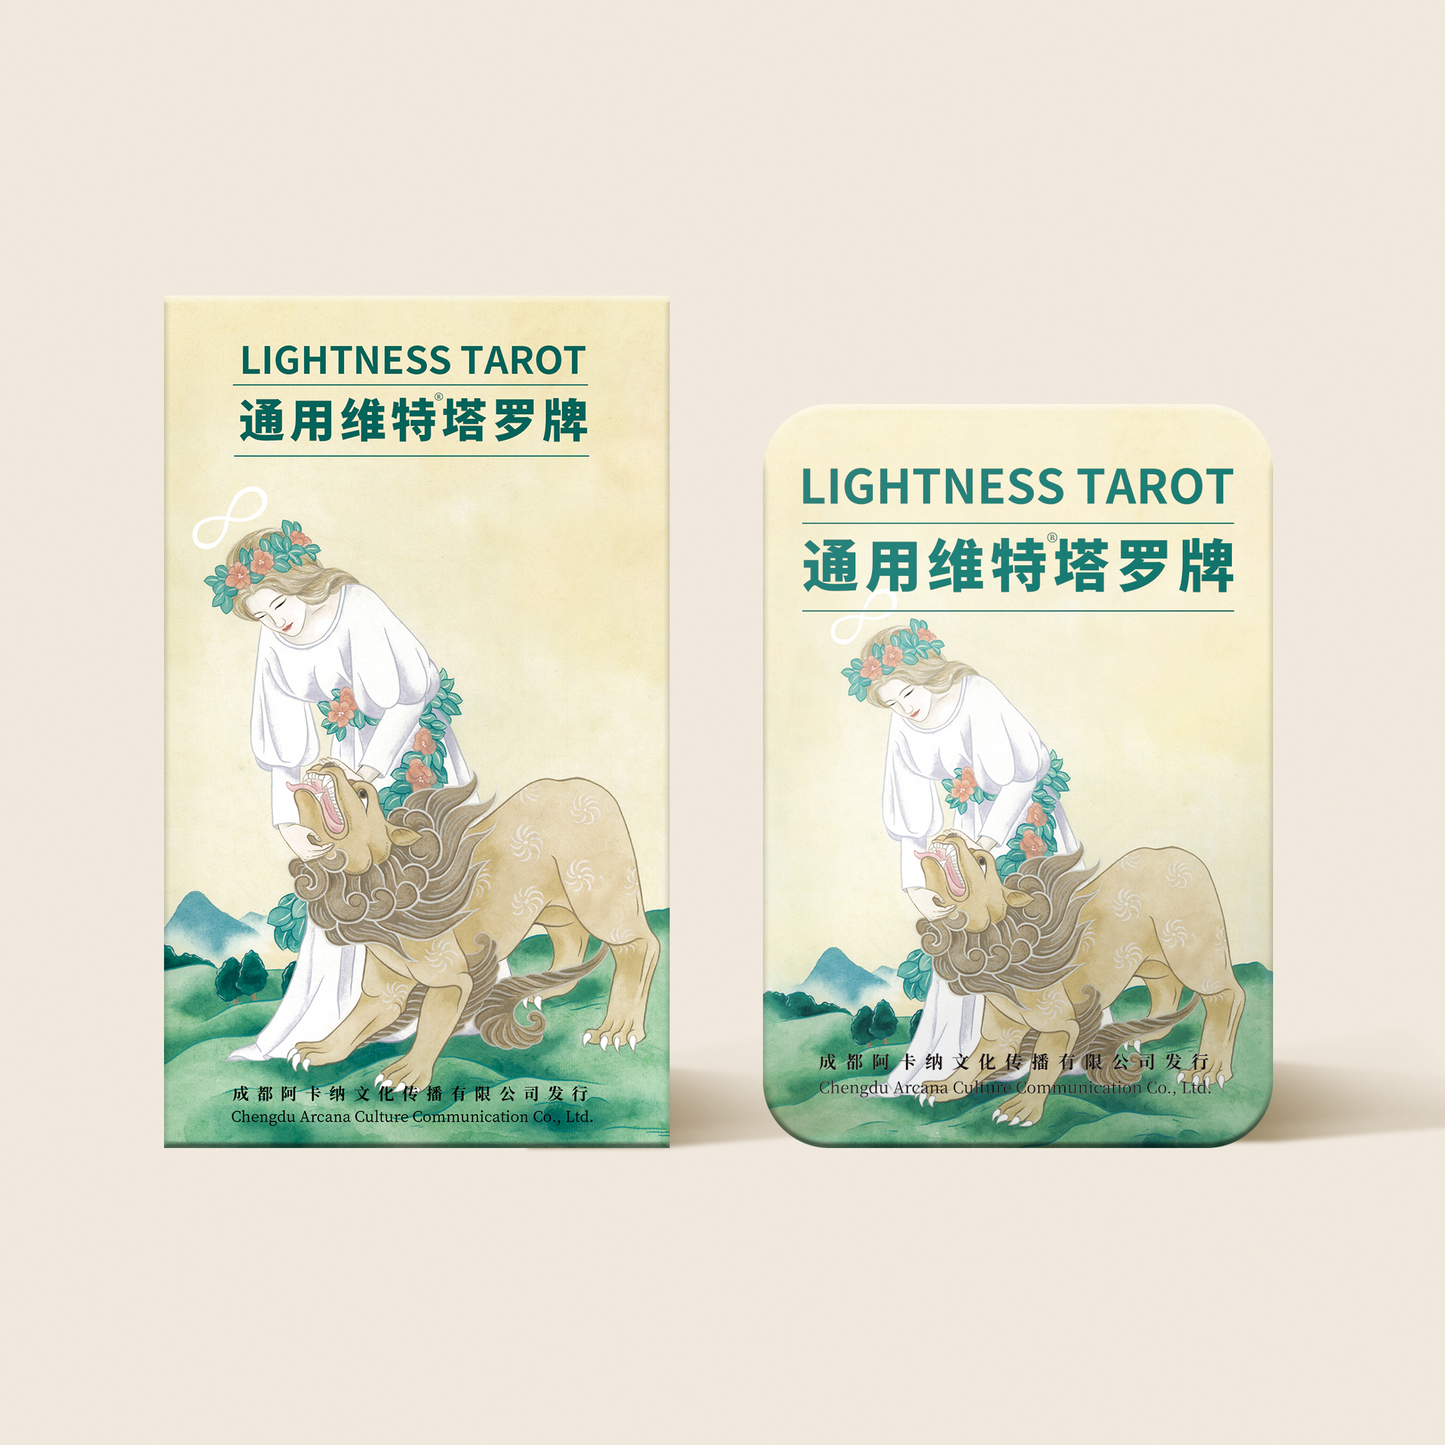 Lightness Tarot